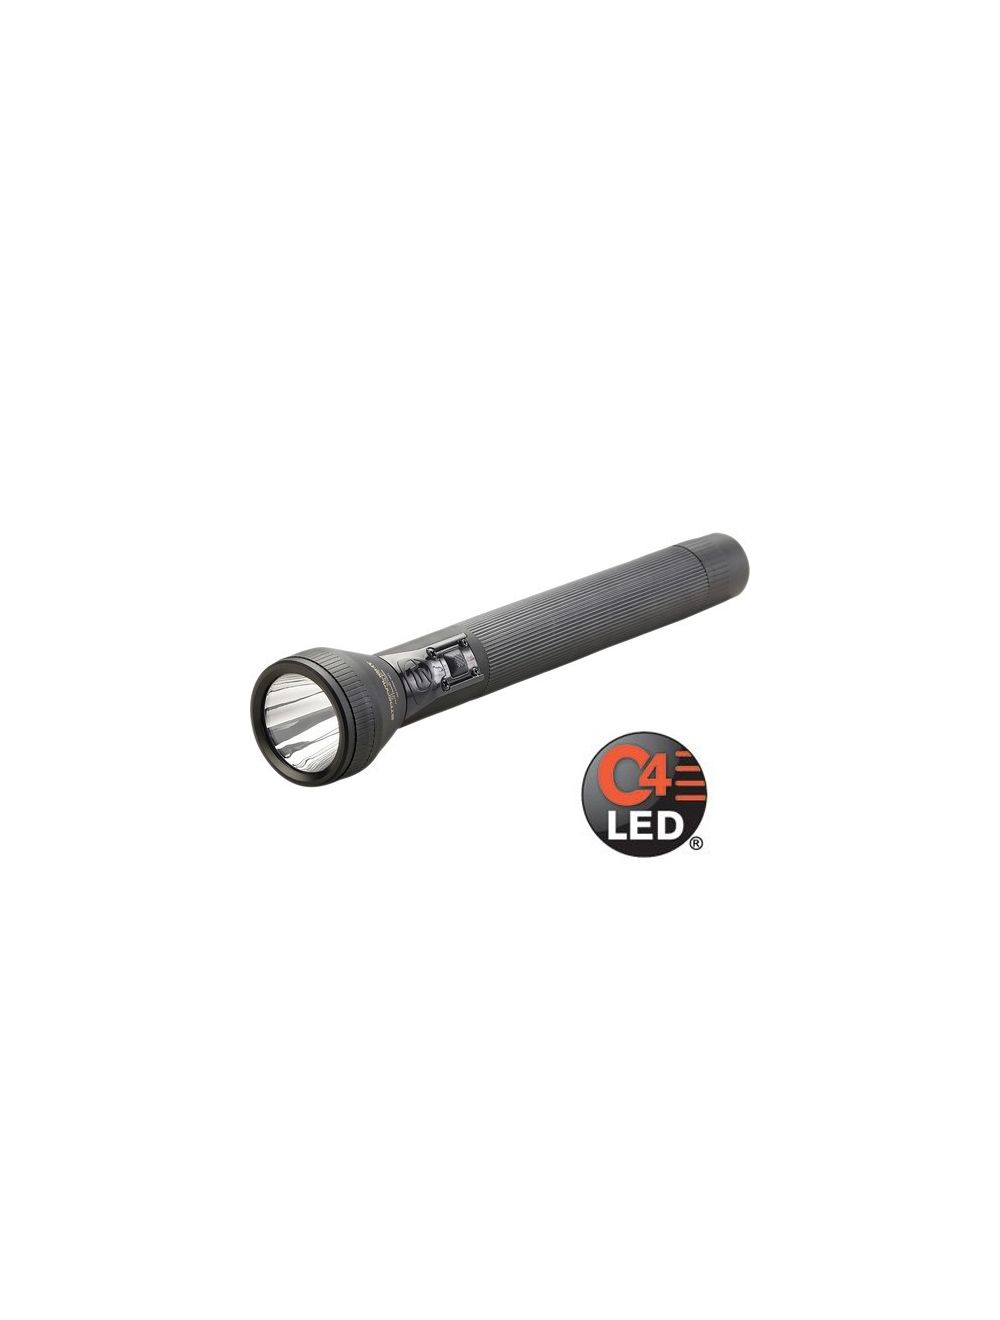 Streamlight SL-20LP Full LED oplaadbaar zwart losse kopen? Zaklampen.nl